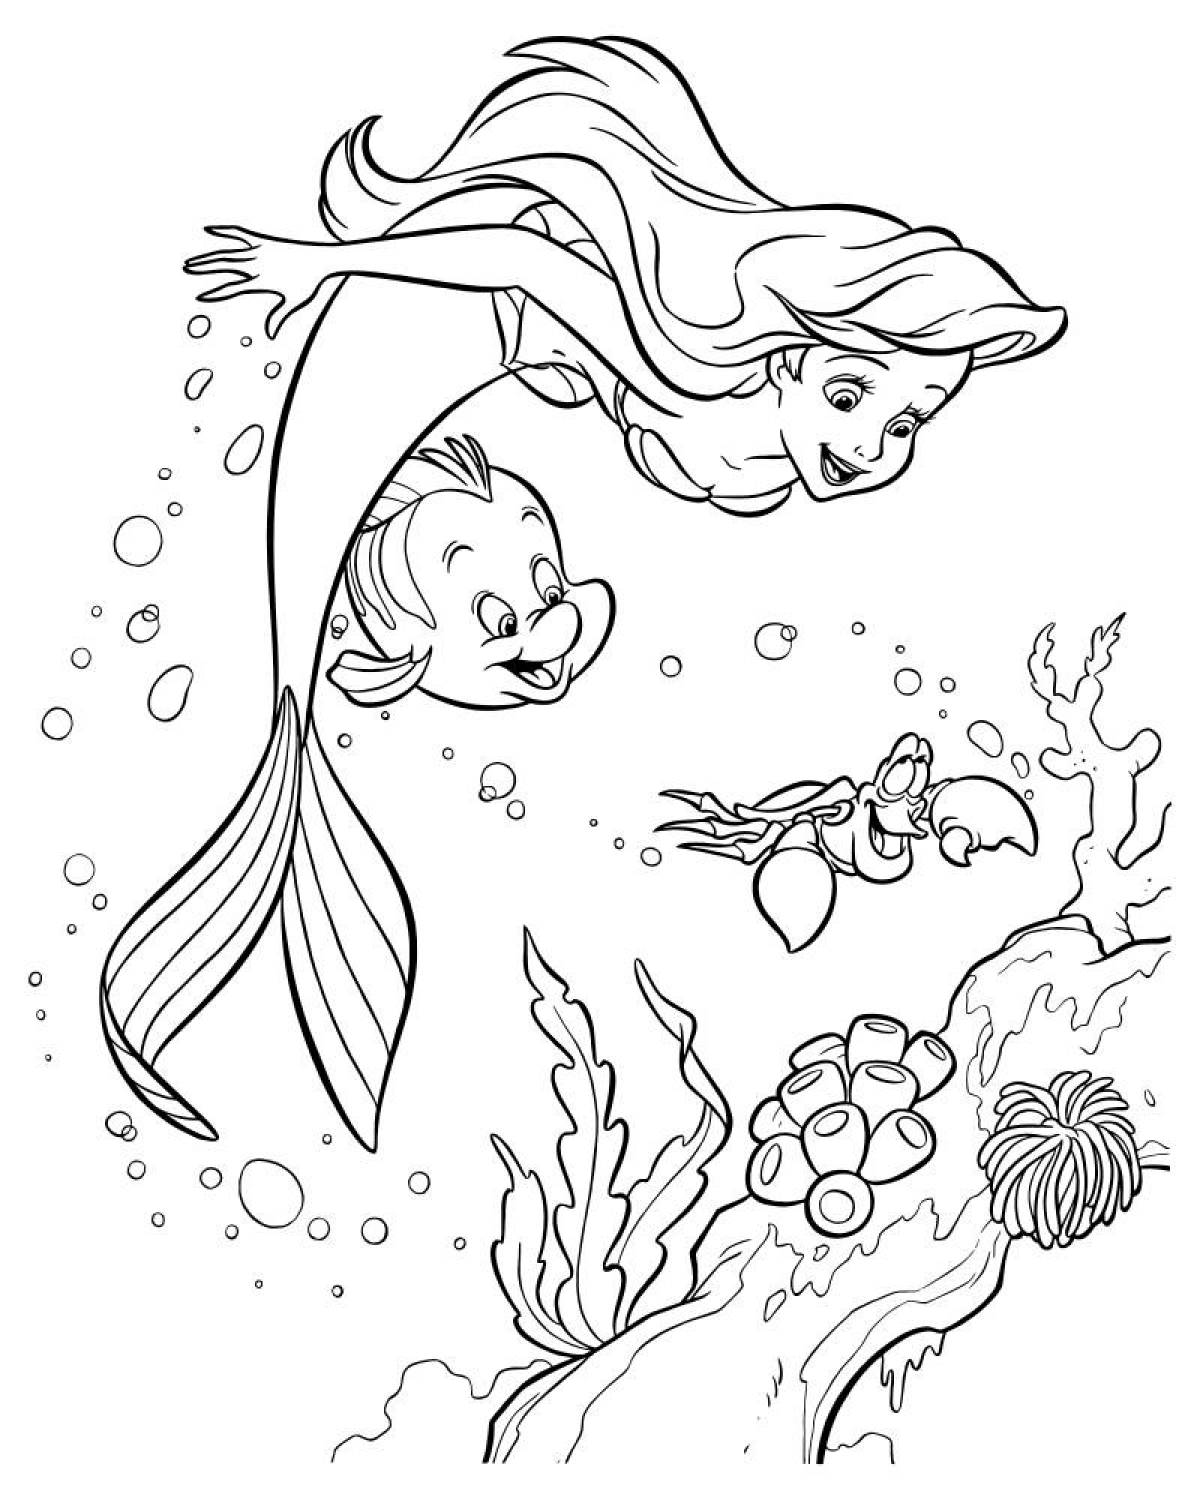 Luminous little mermaid coloring book for kids